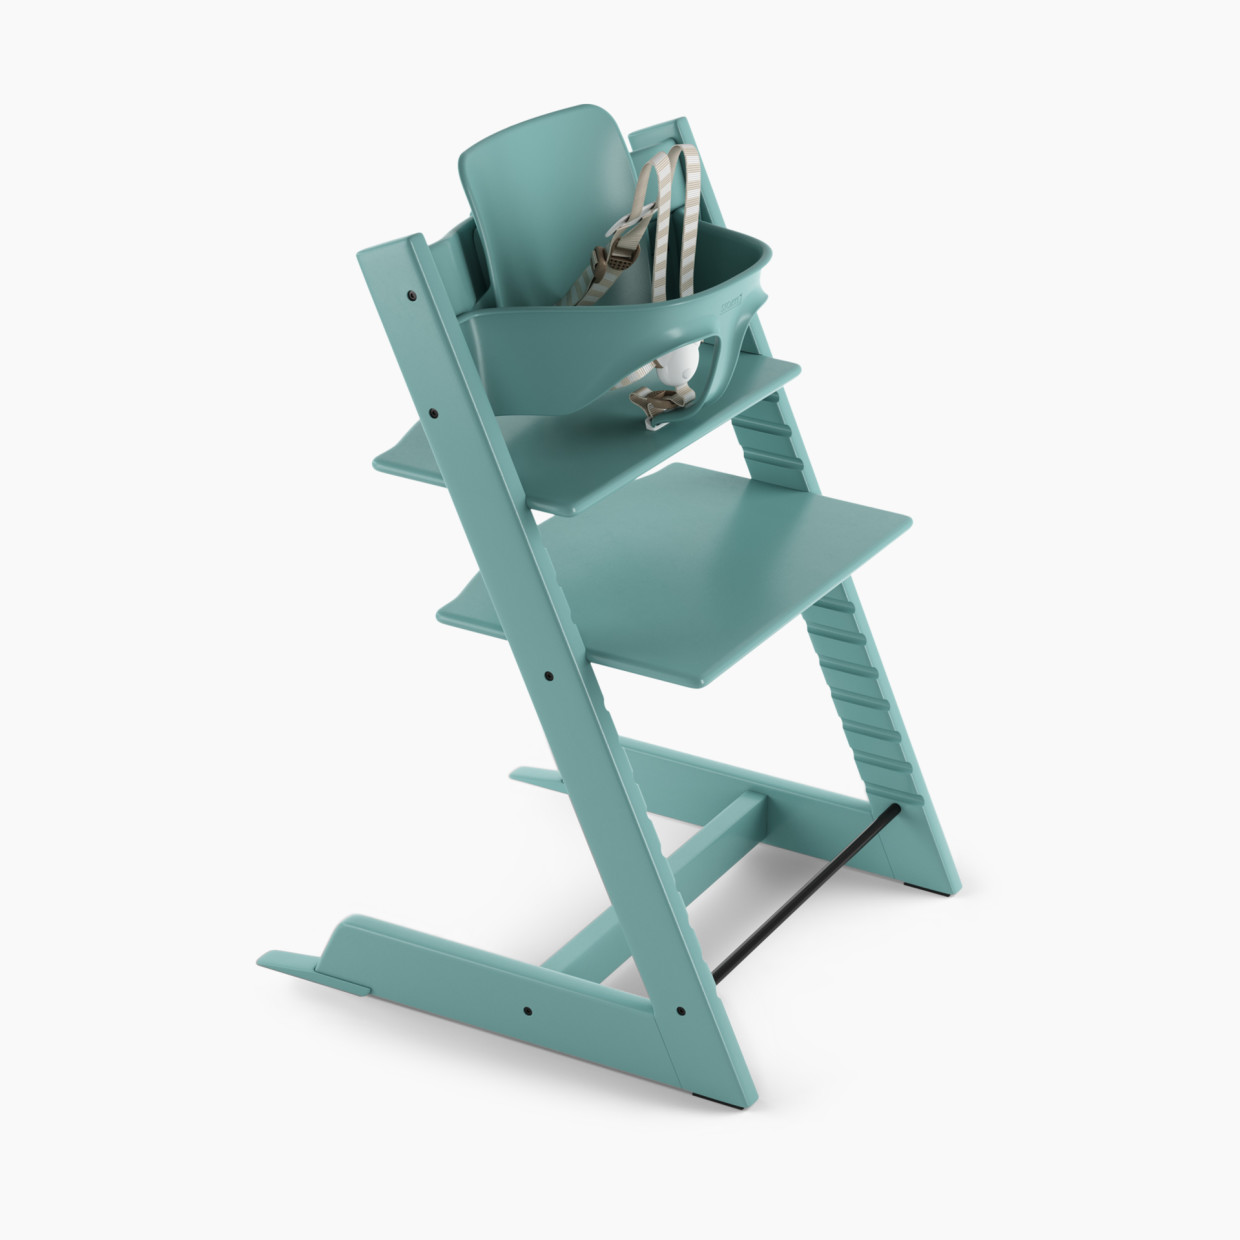 Stokke Tripp Trapp High Chair - Aqua Blue.